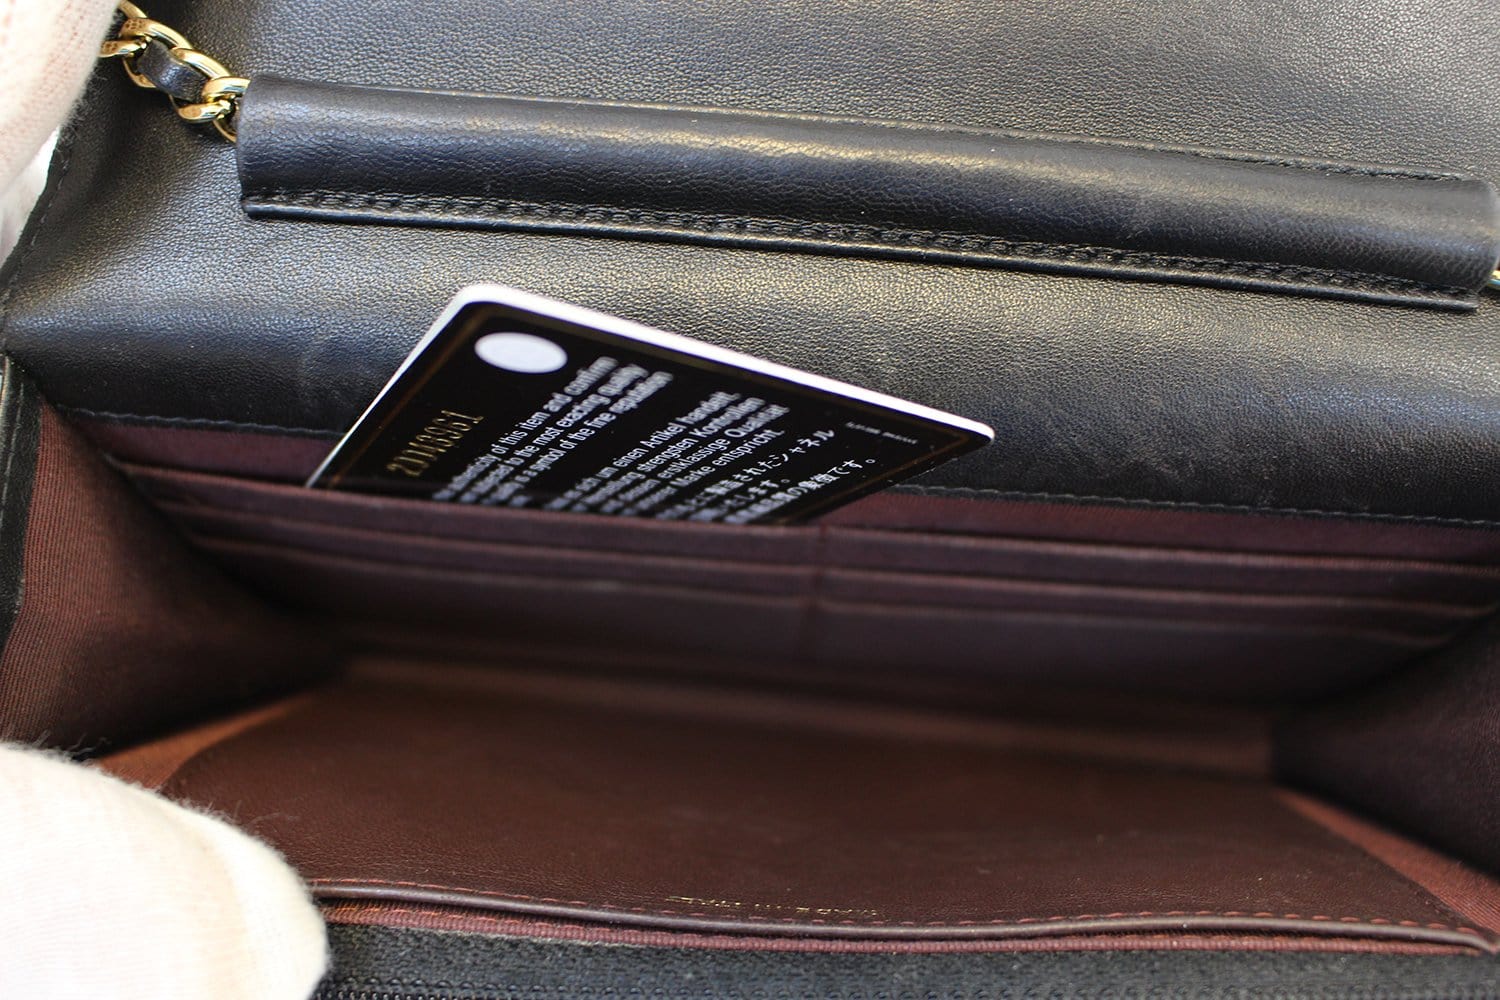 CHANEL Wallet On Chain - CHANEL Crossbody Bag Flap